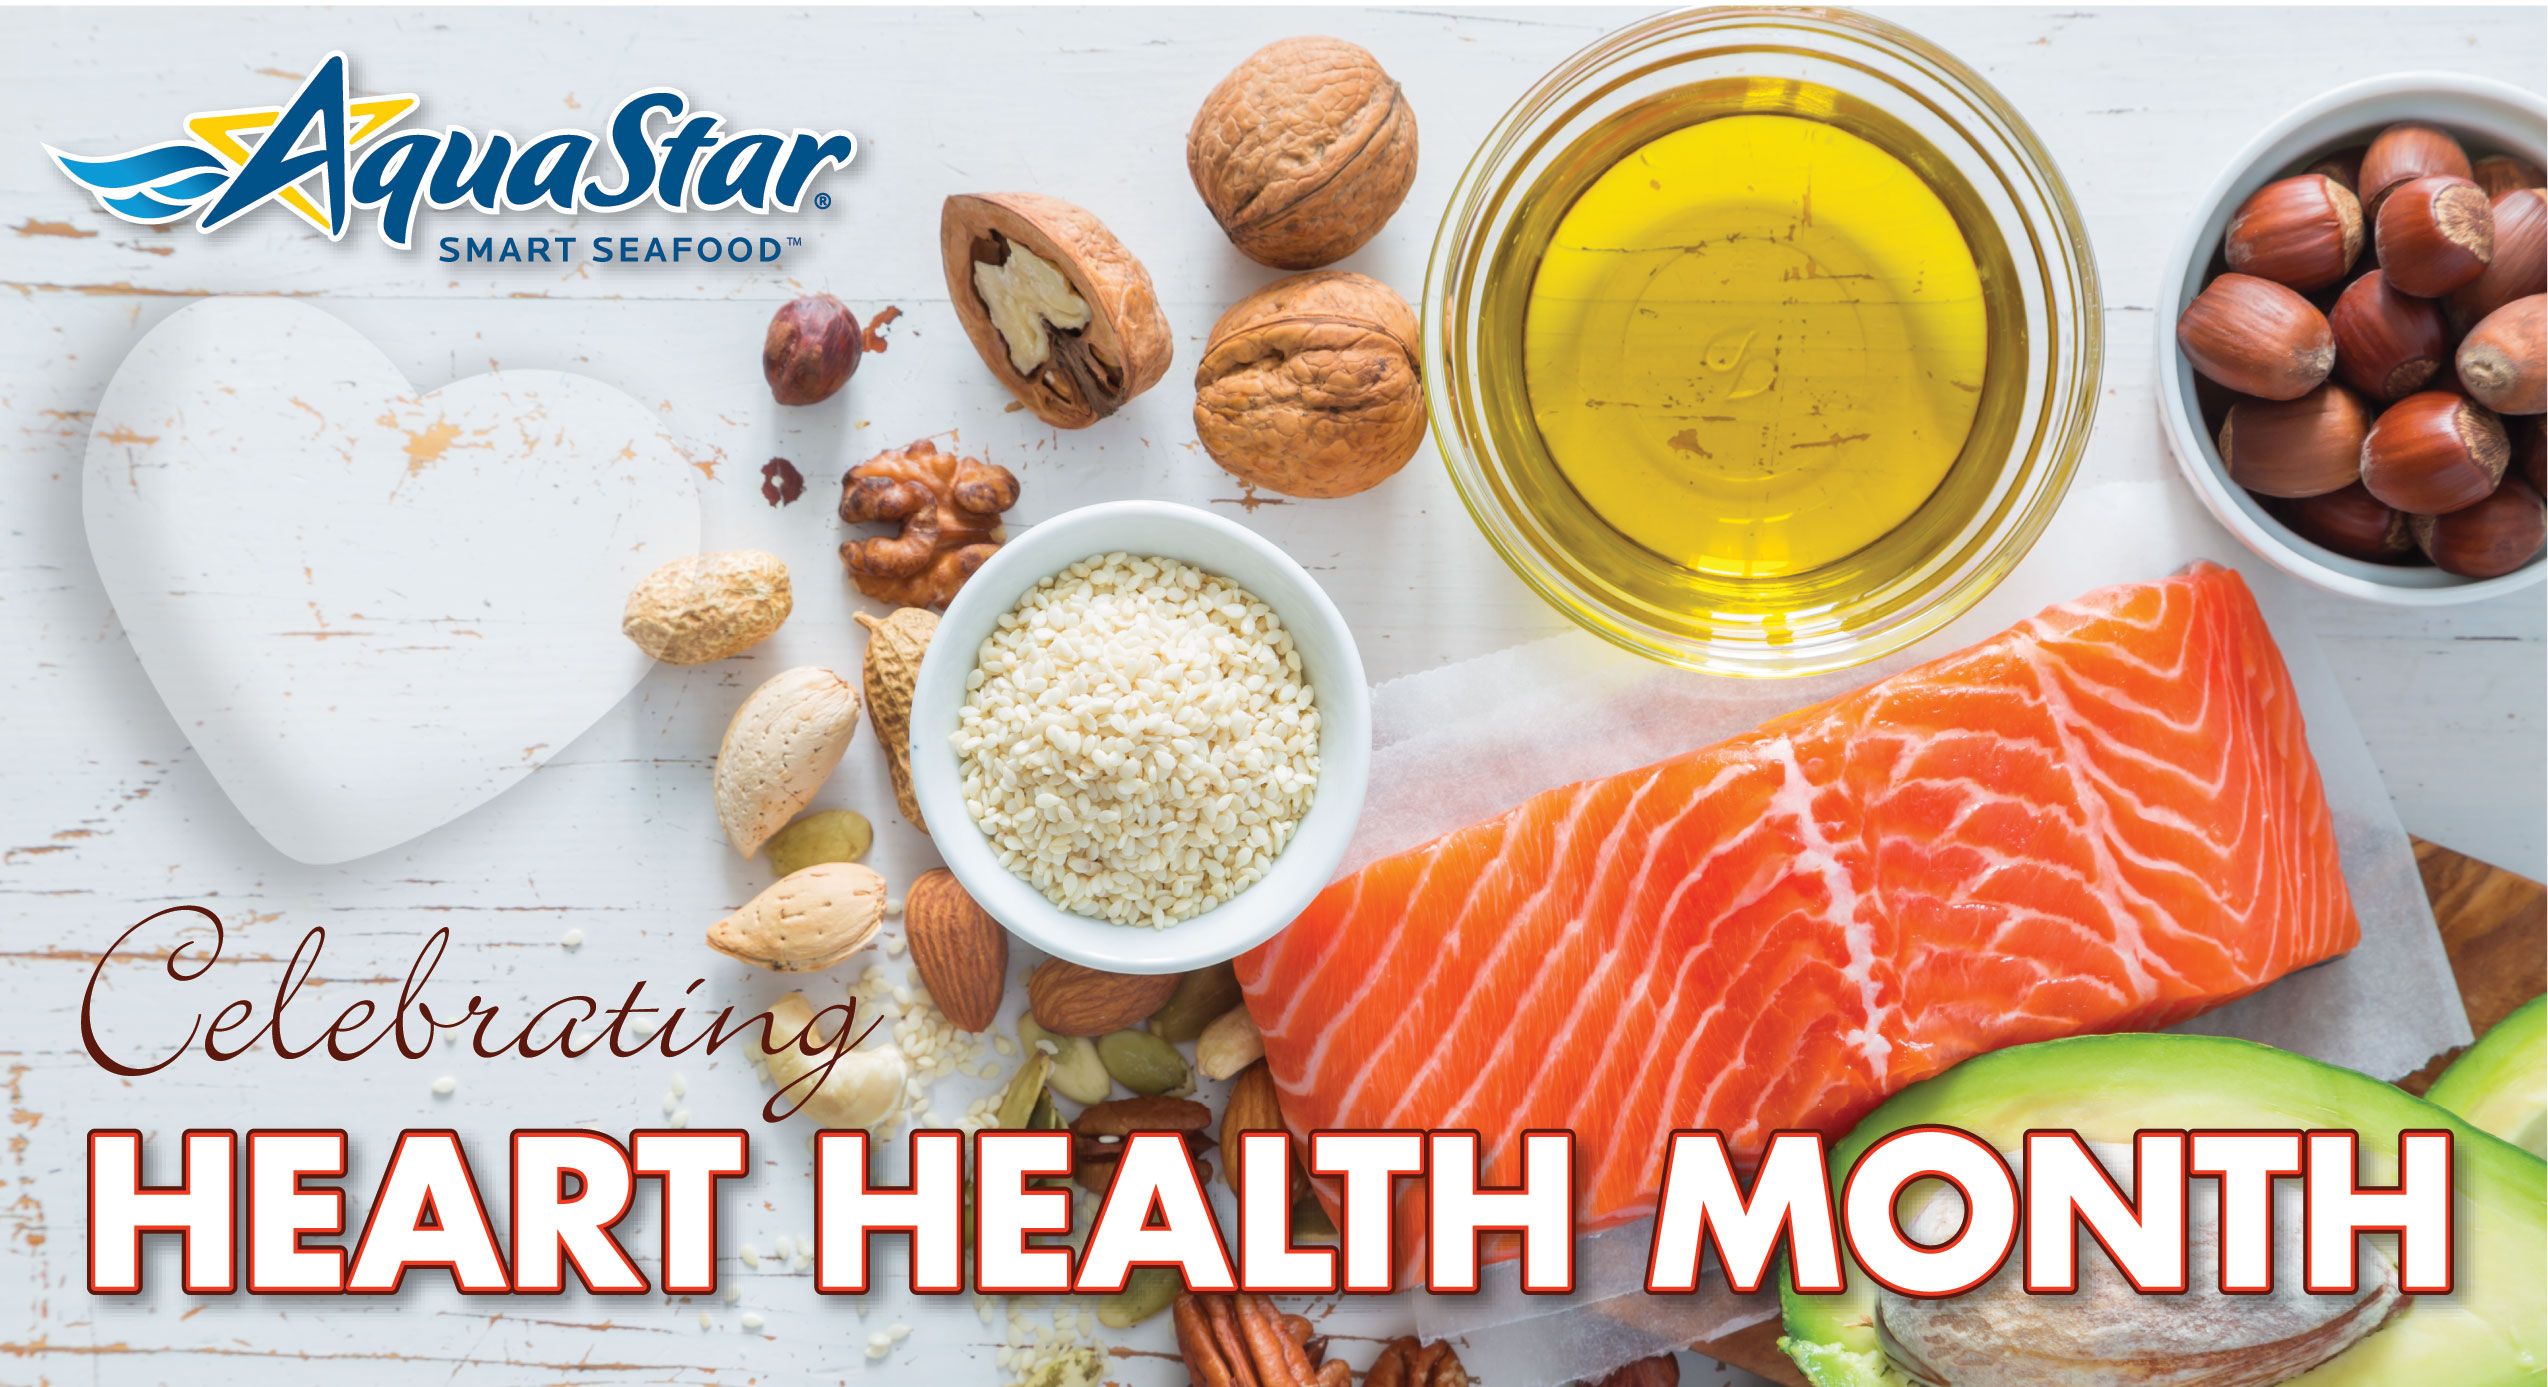 aquas-star-celebrating-heart-health-month-header